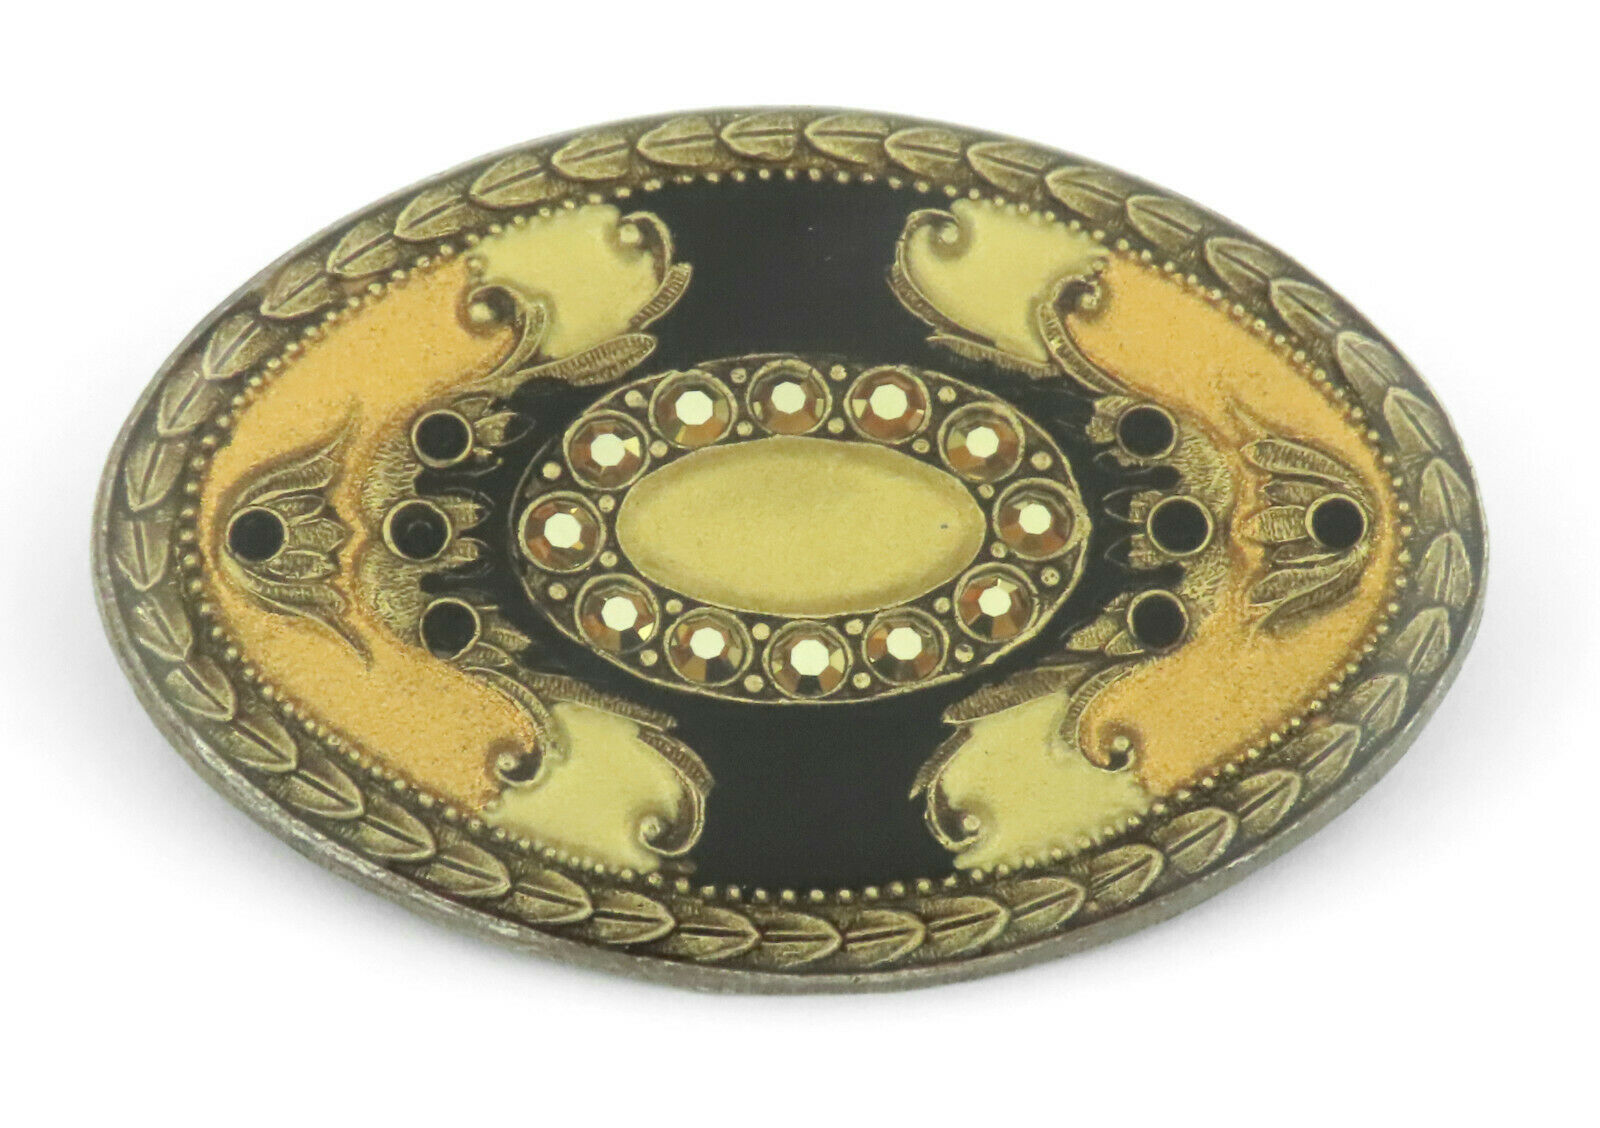 1920-40s - Large Art Deco Gold & Black Enameled Pin / Brooch